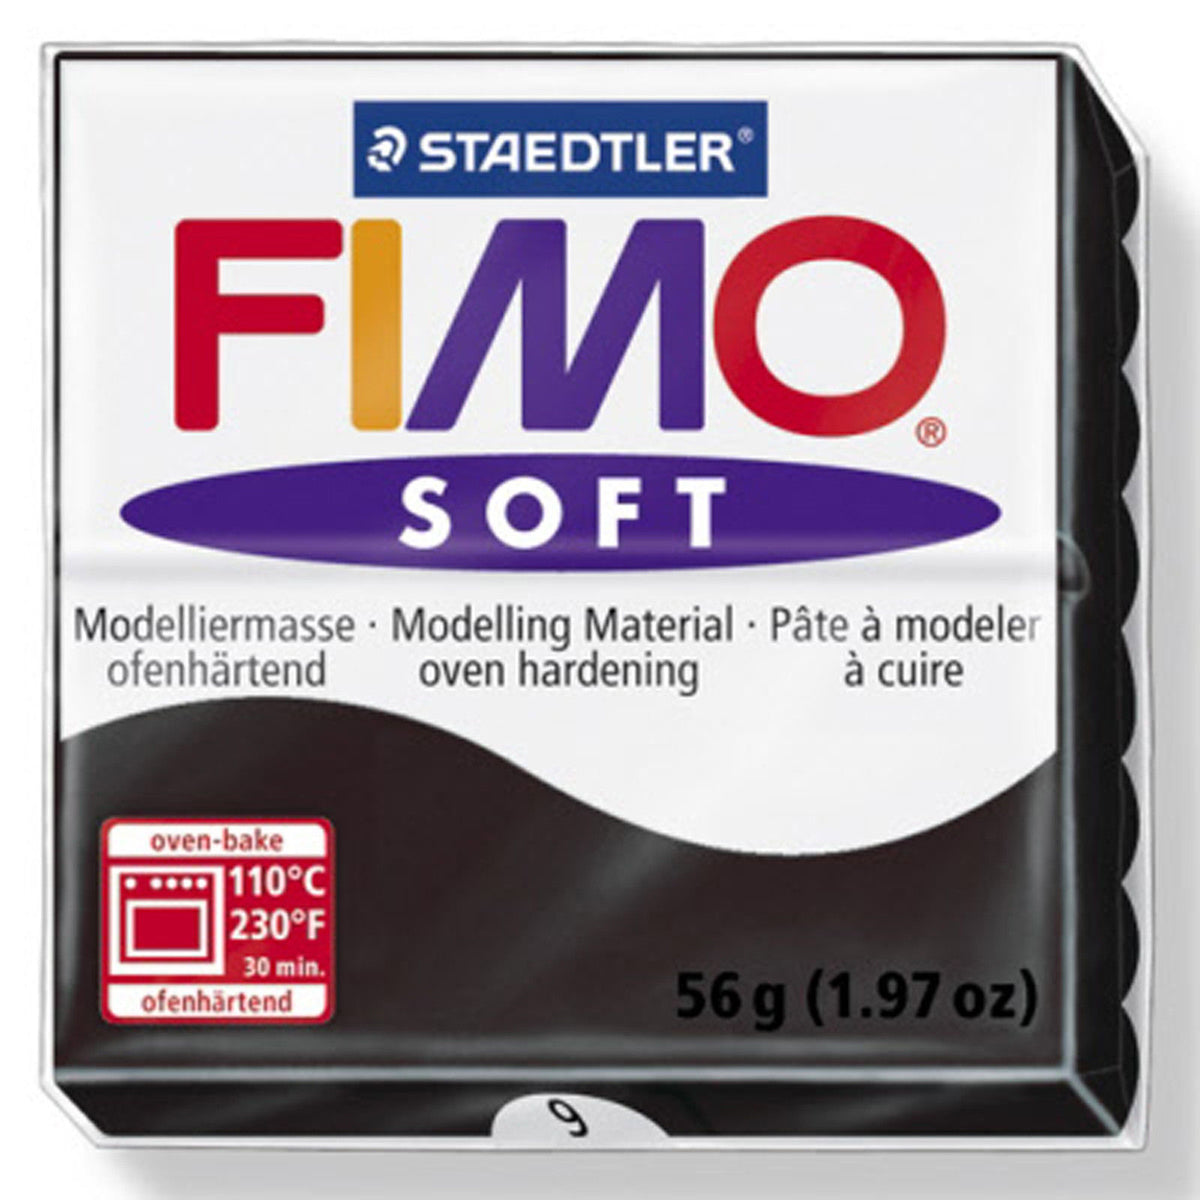 Staedtler Fimo Soft 8020-0 - Pasta para modelar, 57 gramos, color blanco